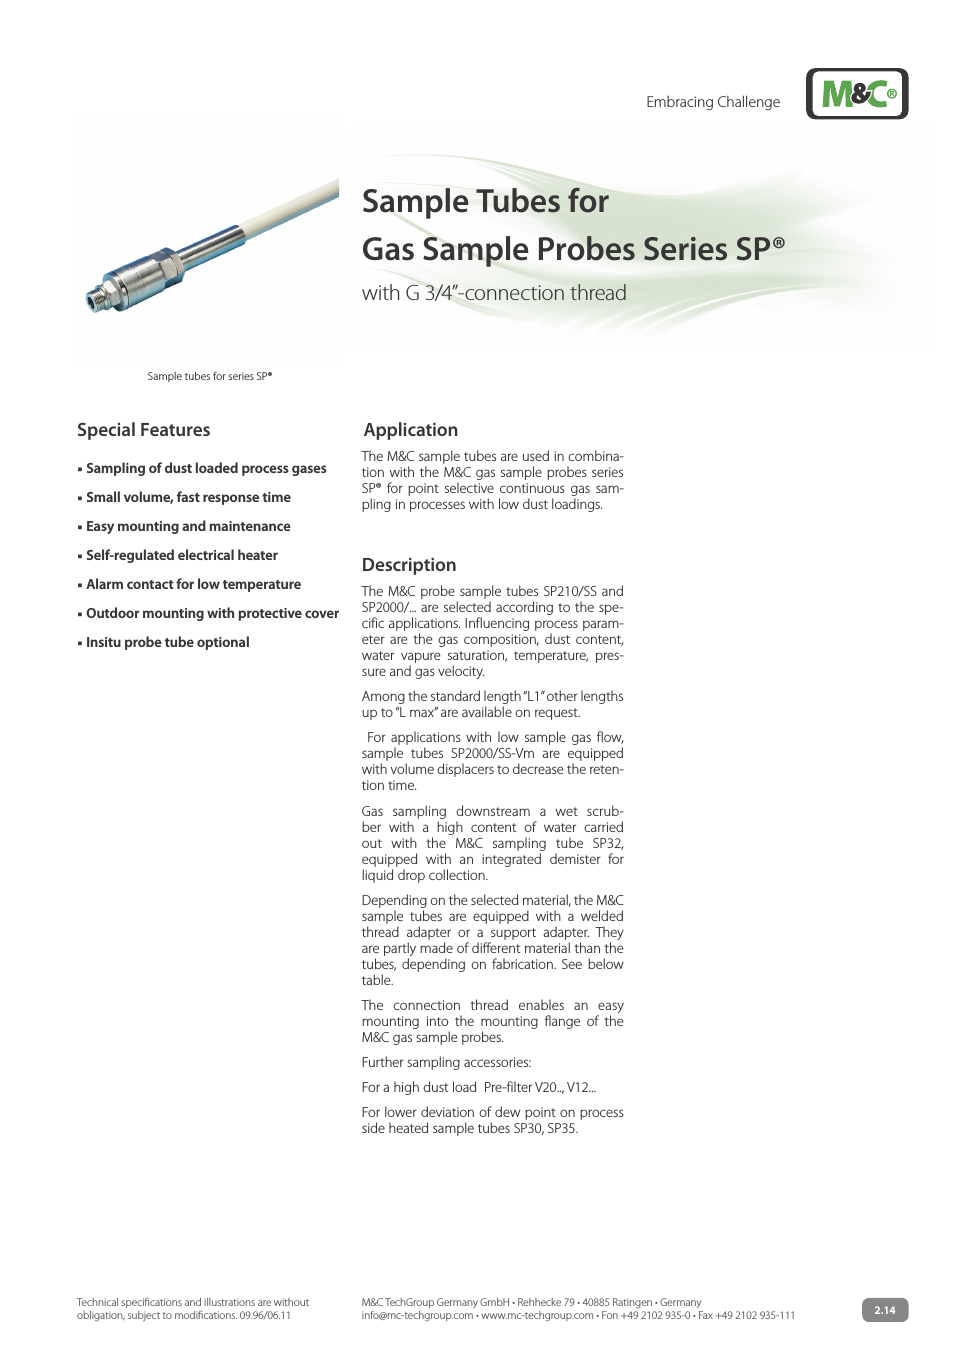 Gas Sample Probes Series SP Data sheet